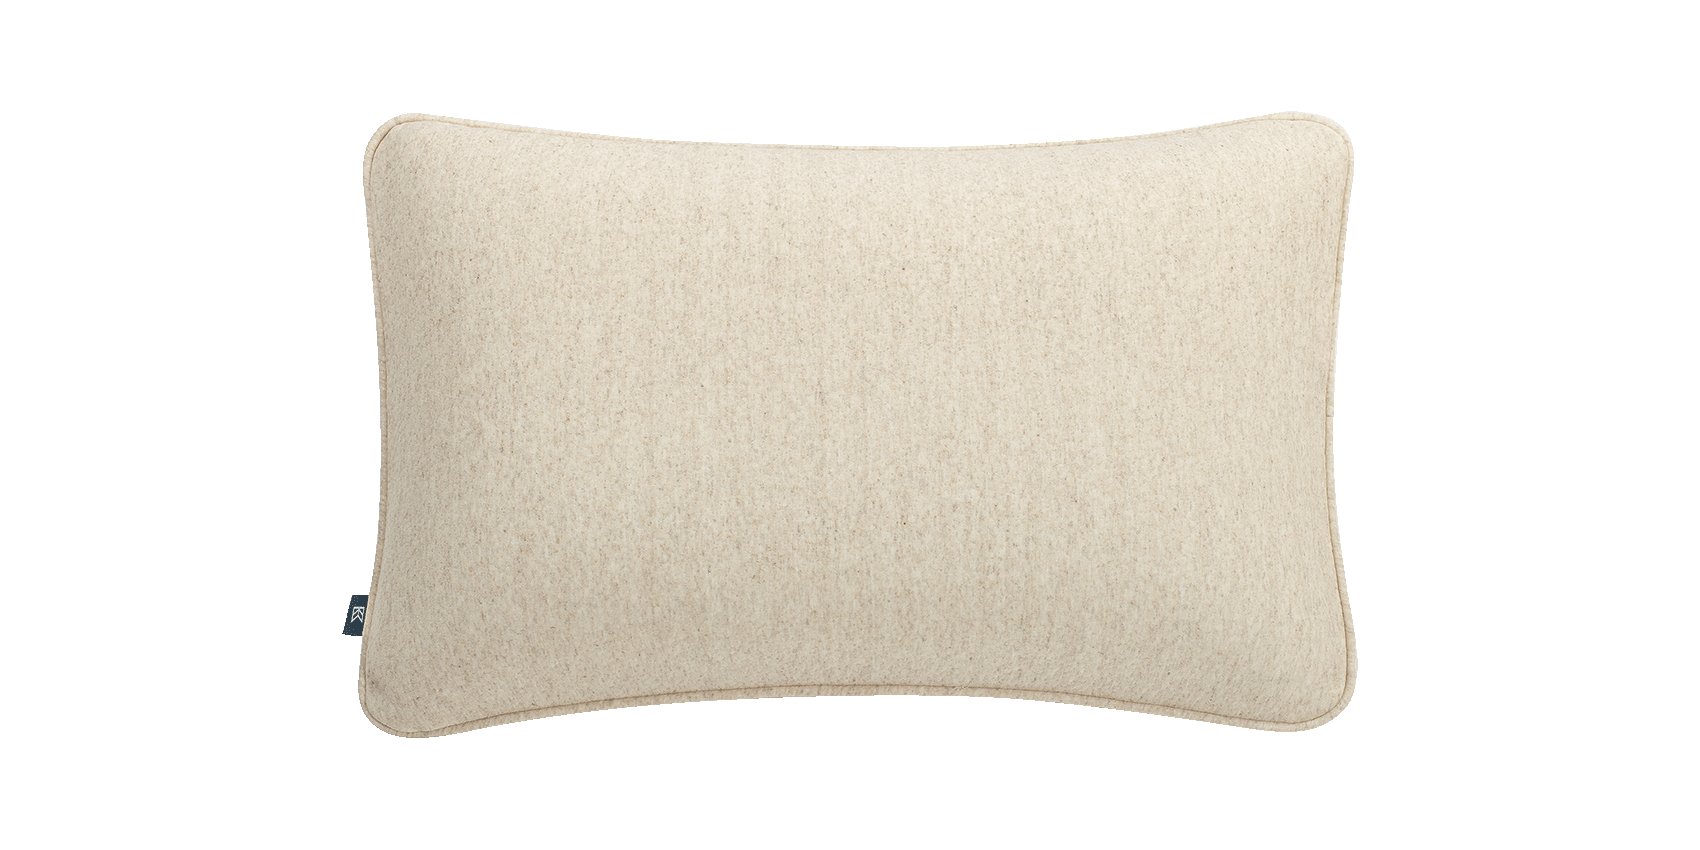 Soft Dual Comfort Pillow Review